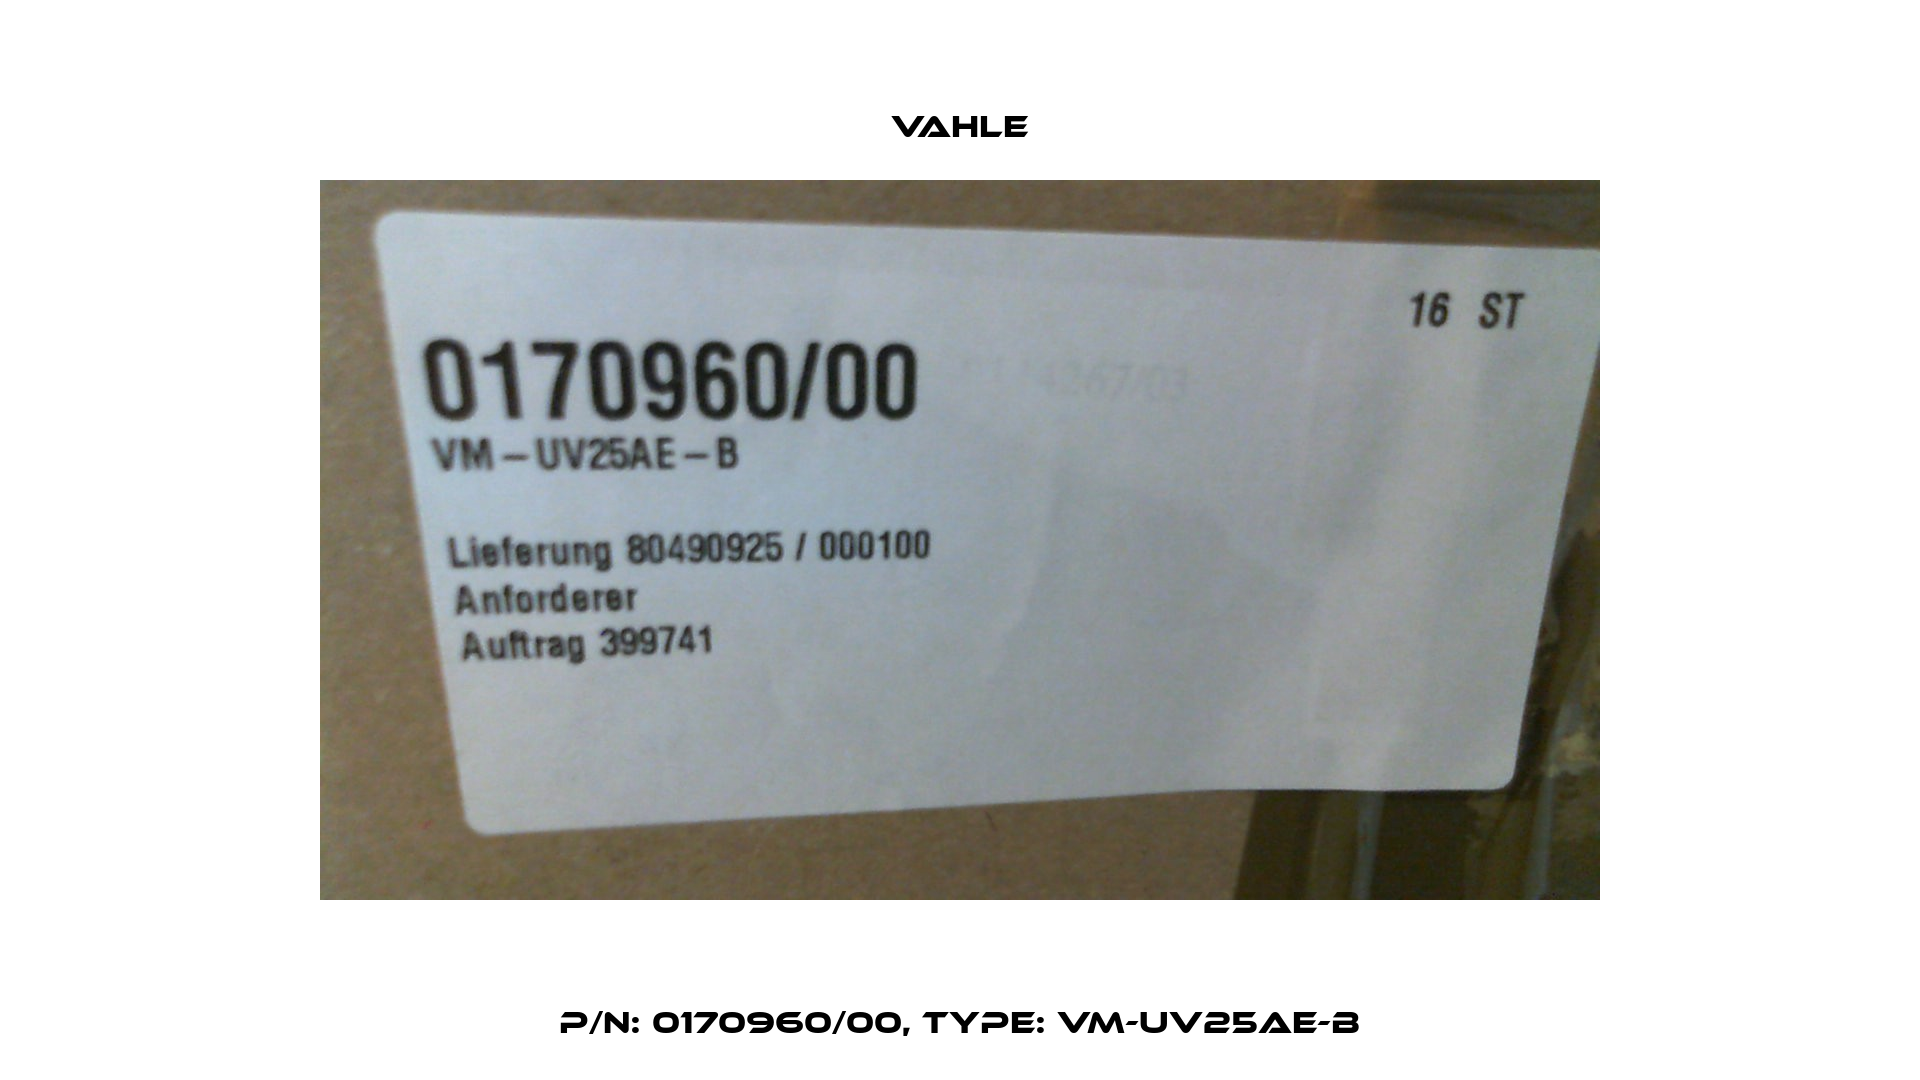 P/n: 0170960/00, Type: VM-UV25AE-B Vahle